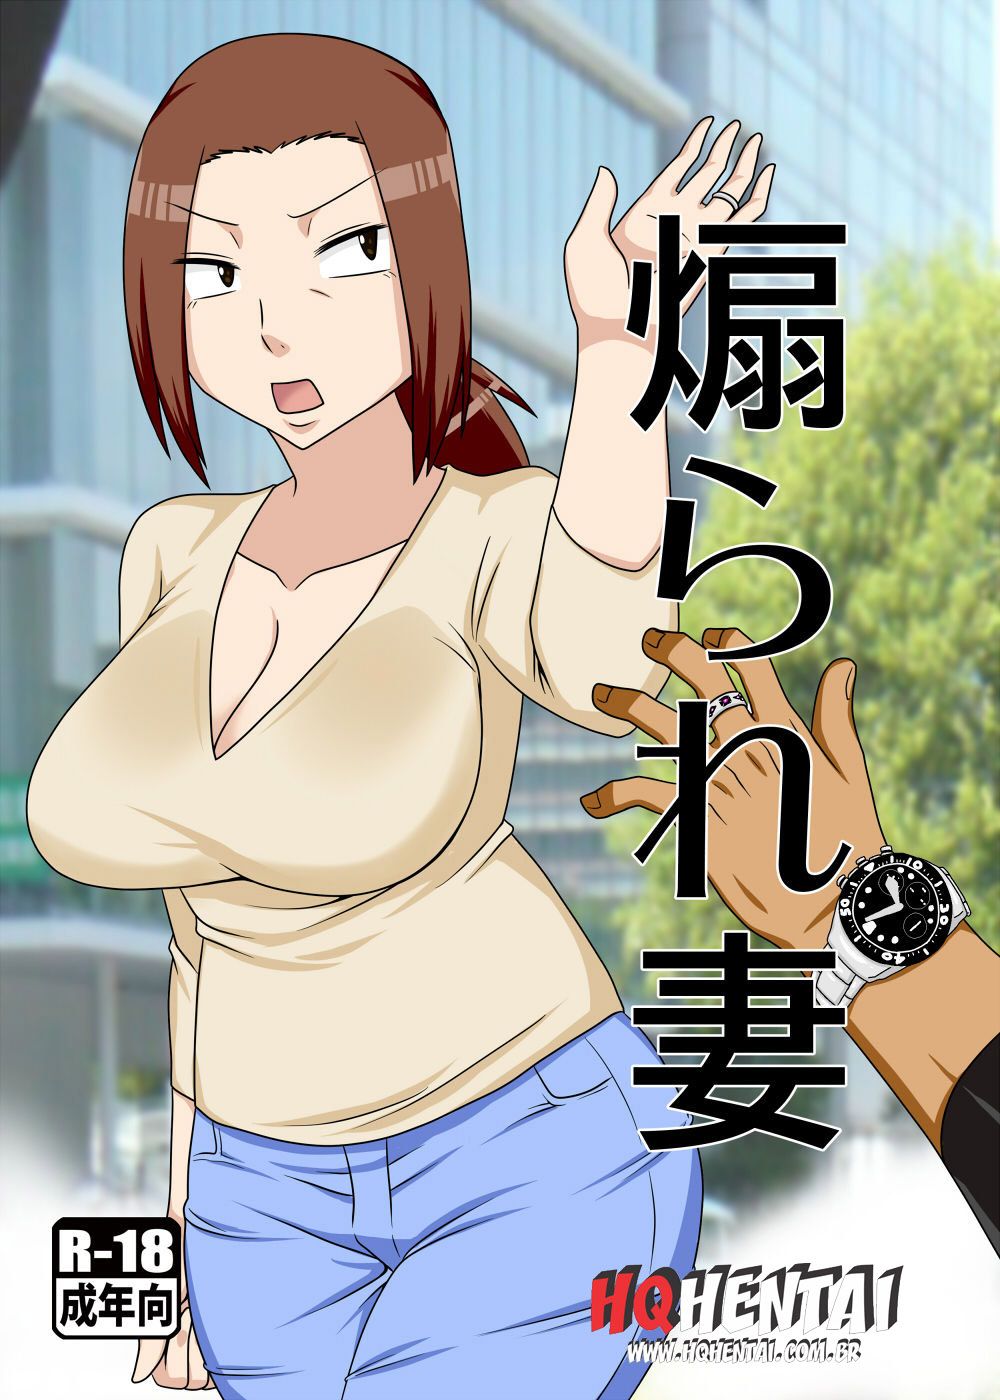 (HQ HENTAI) Aorare Tsuma an agitated housewife 01 (1)